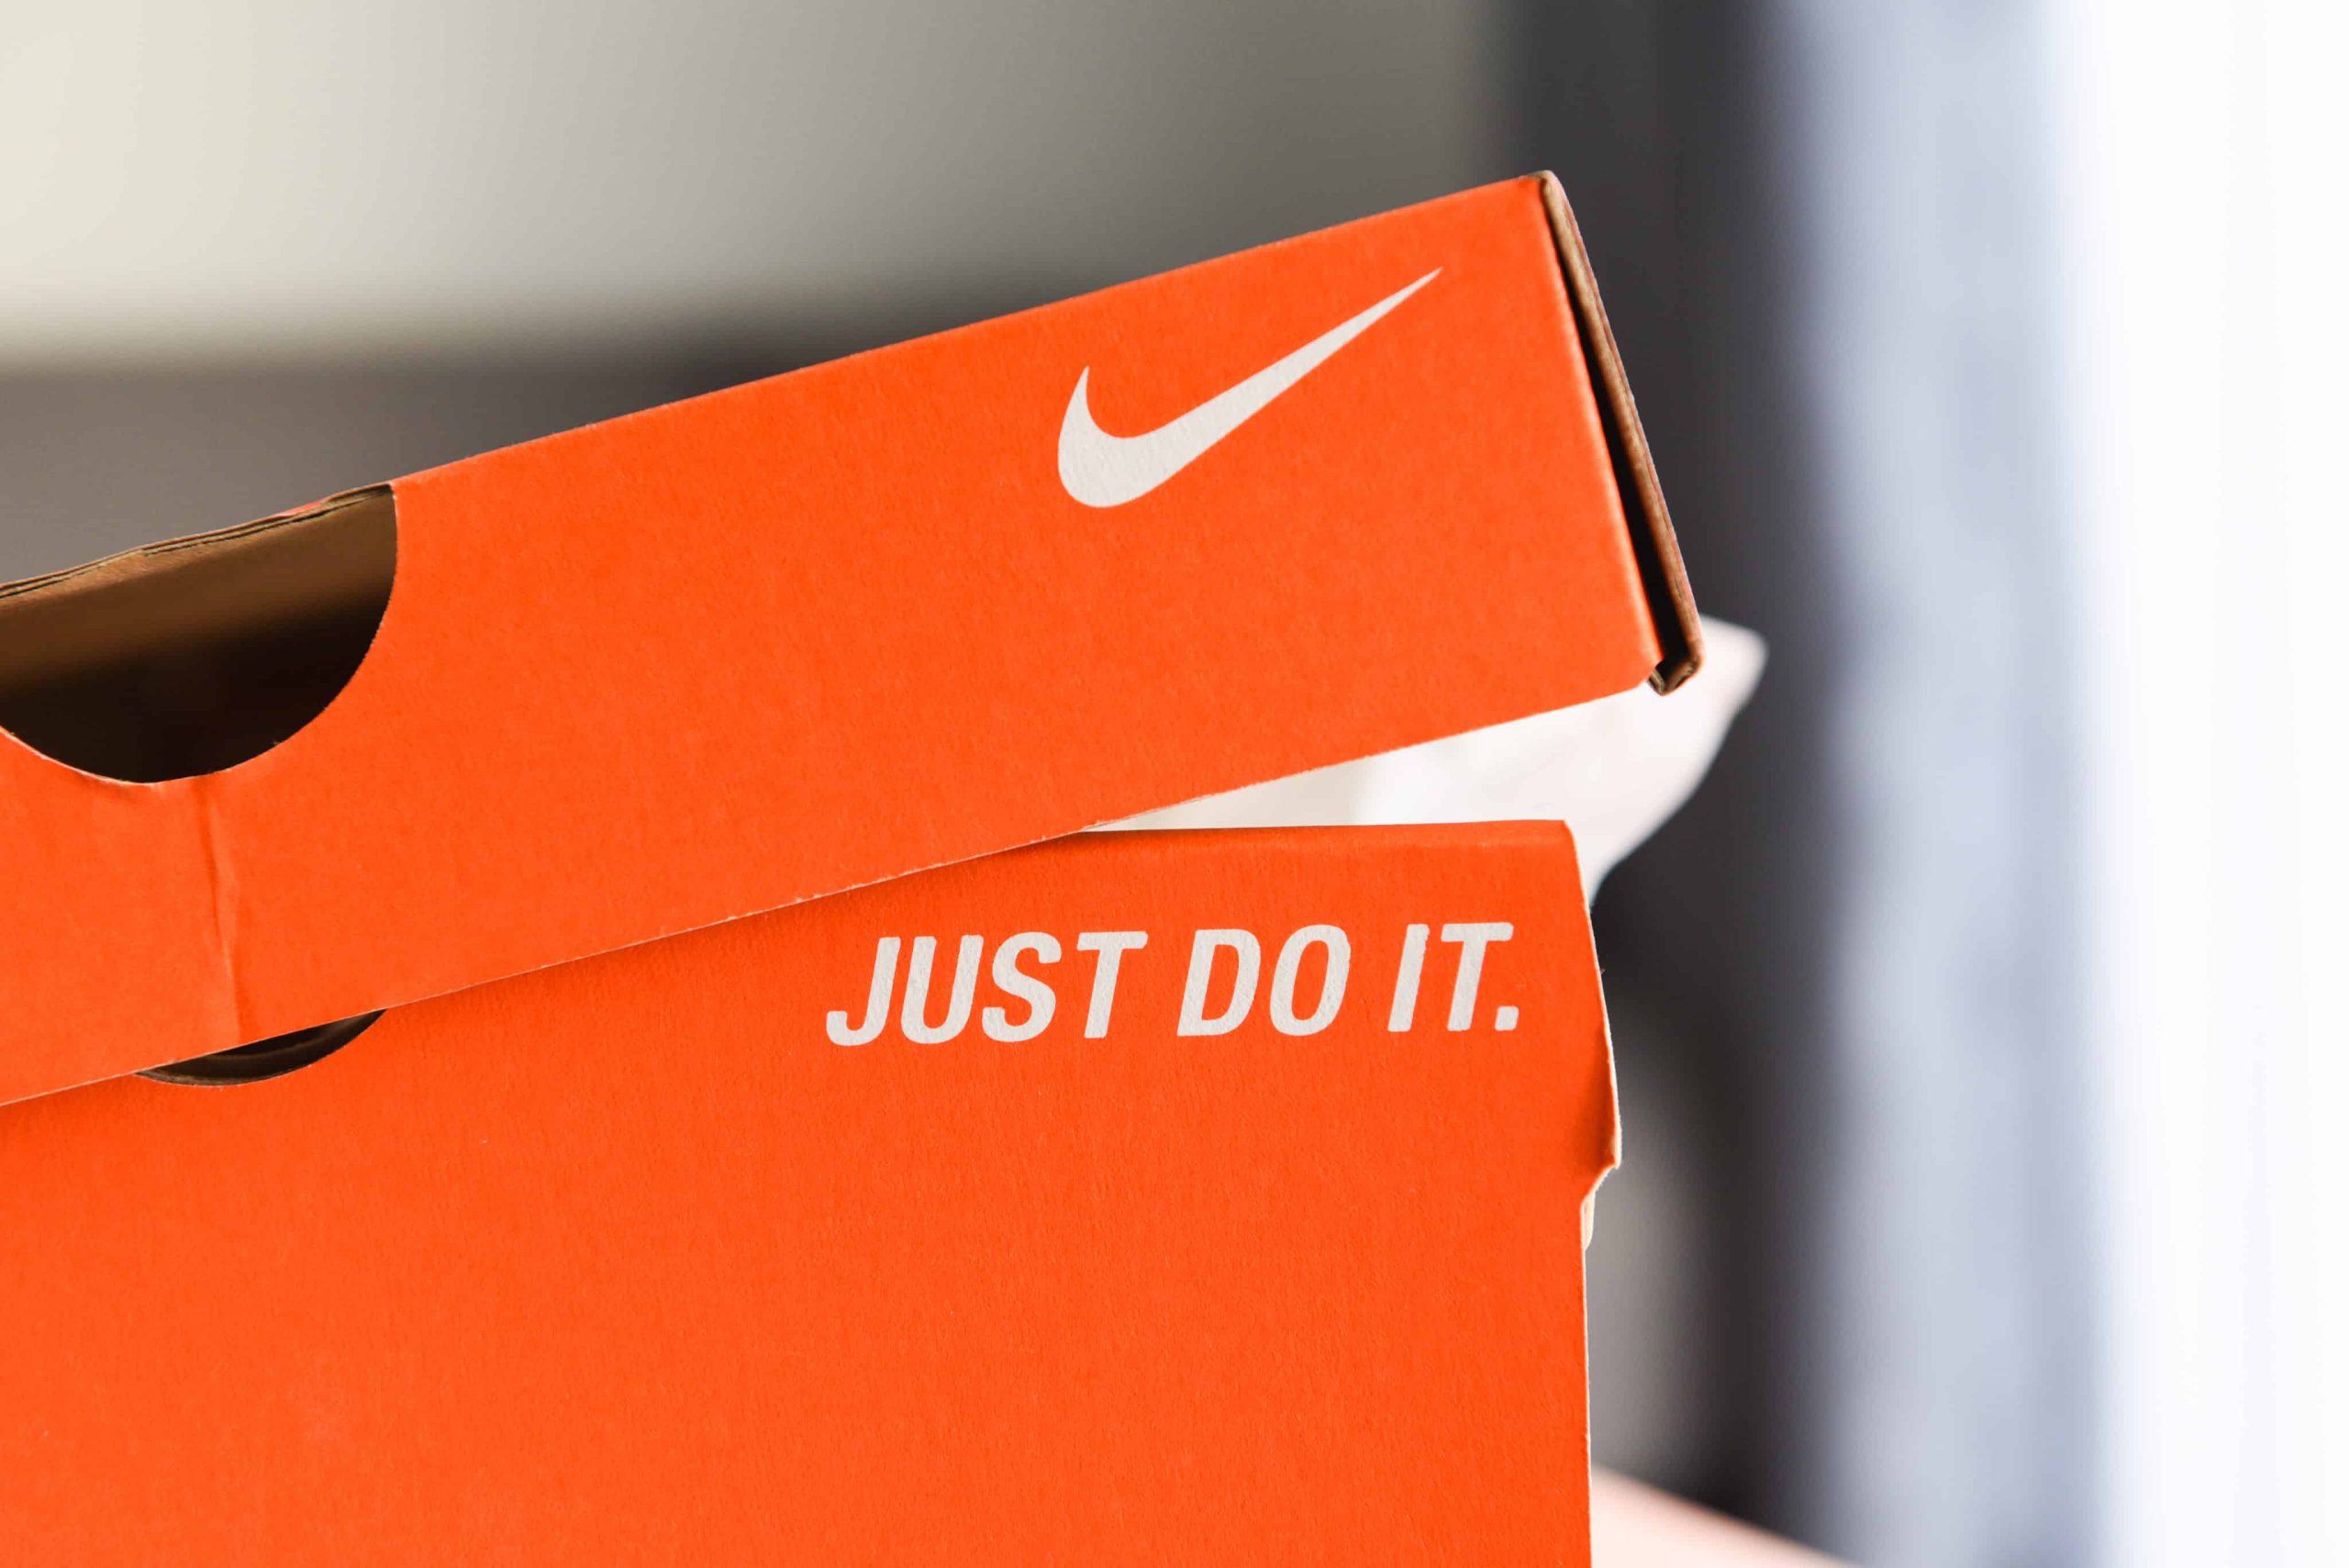 Nike Challenges Trademark of Hemp Company Slogan ‘Just Hemp It’